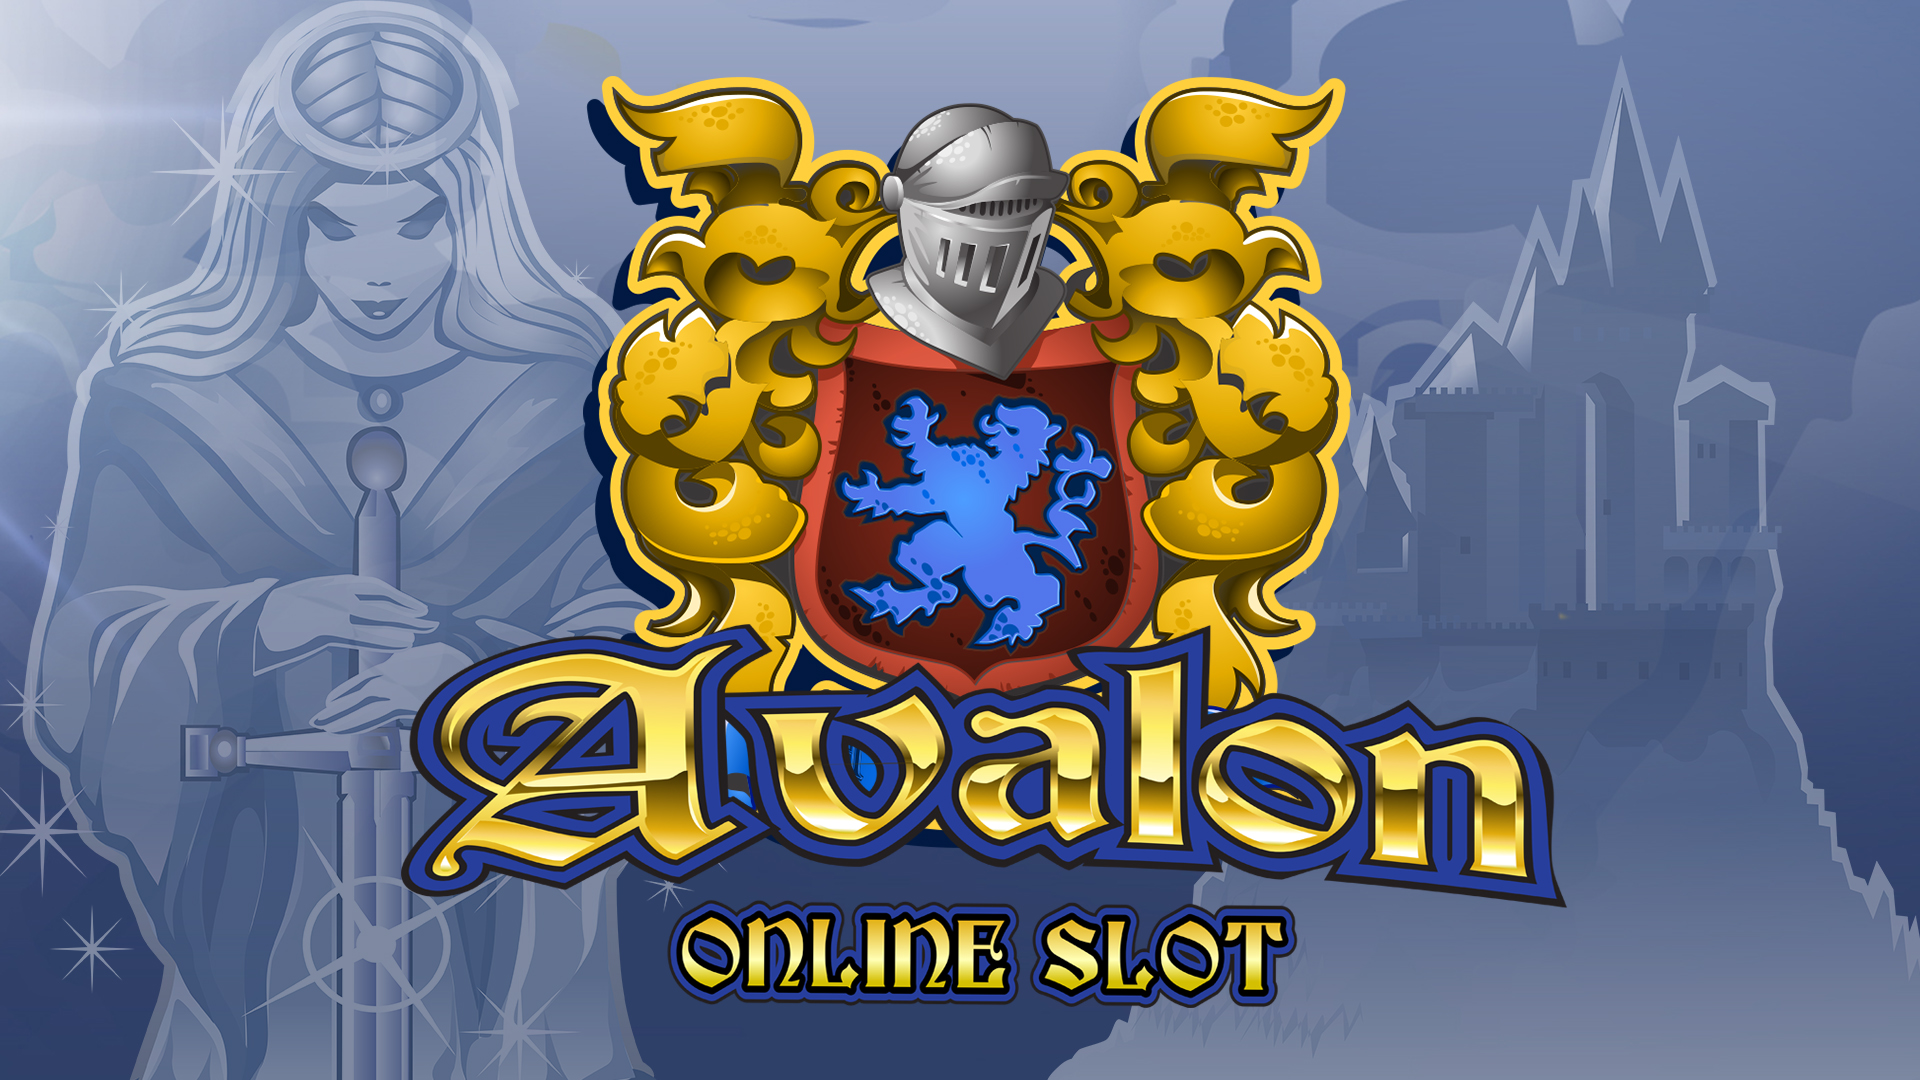 Avalon HD